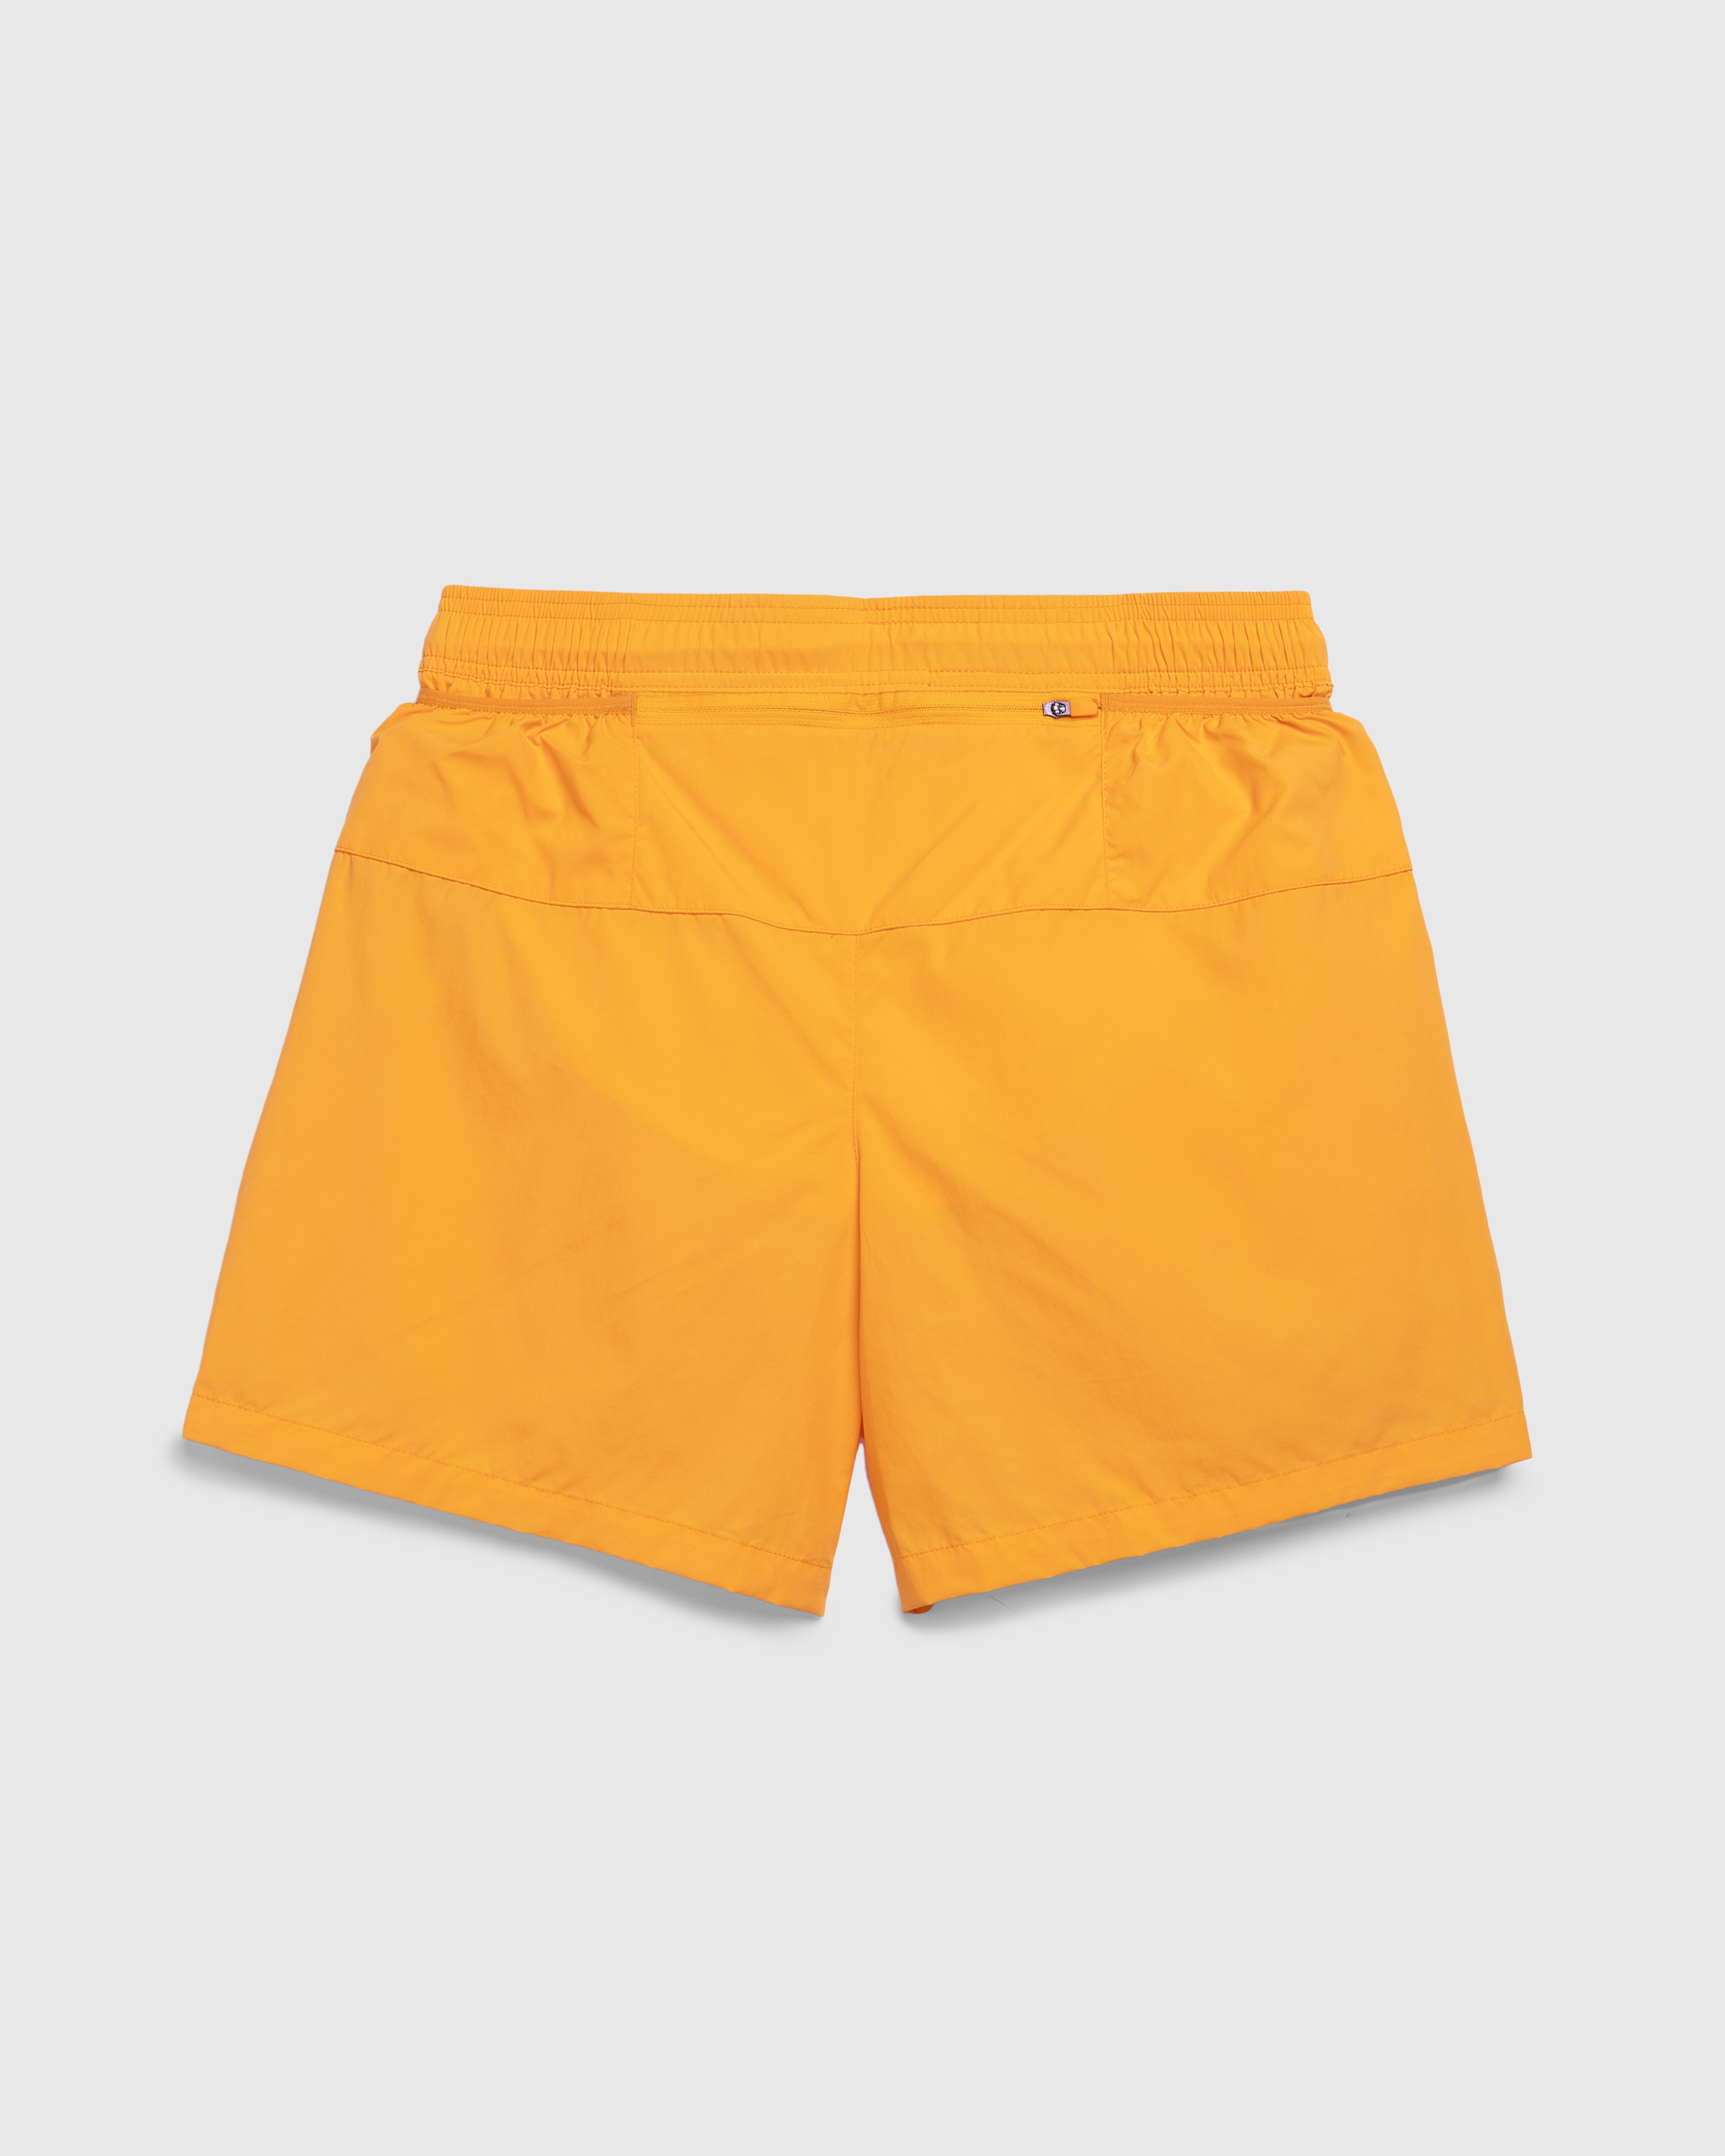 Nike x Patta – Men's Shorts Sundial - Active Shorts - Yellow - Image 6